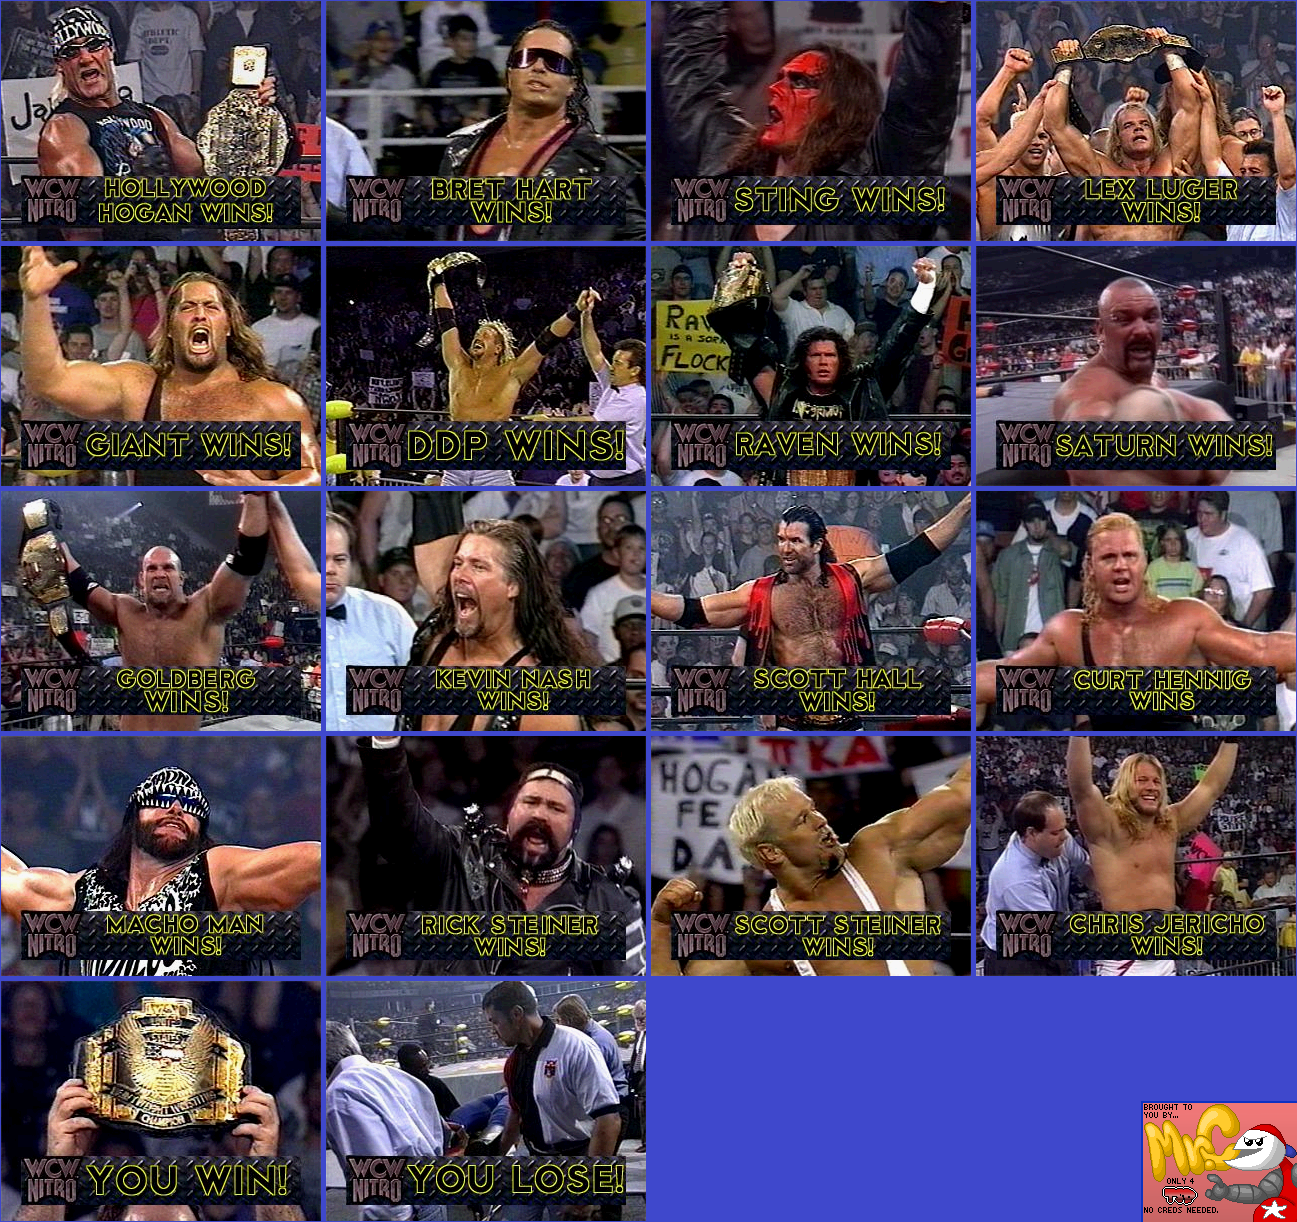 WCW Nitro - Tournament Win/Lose Screens